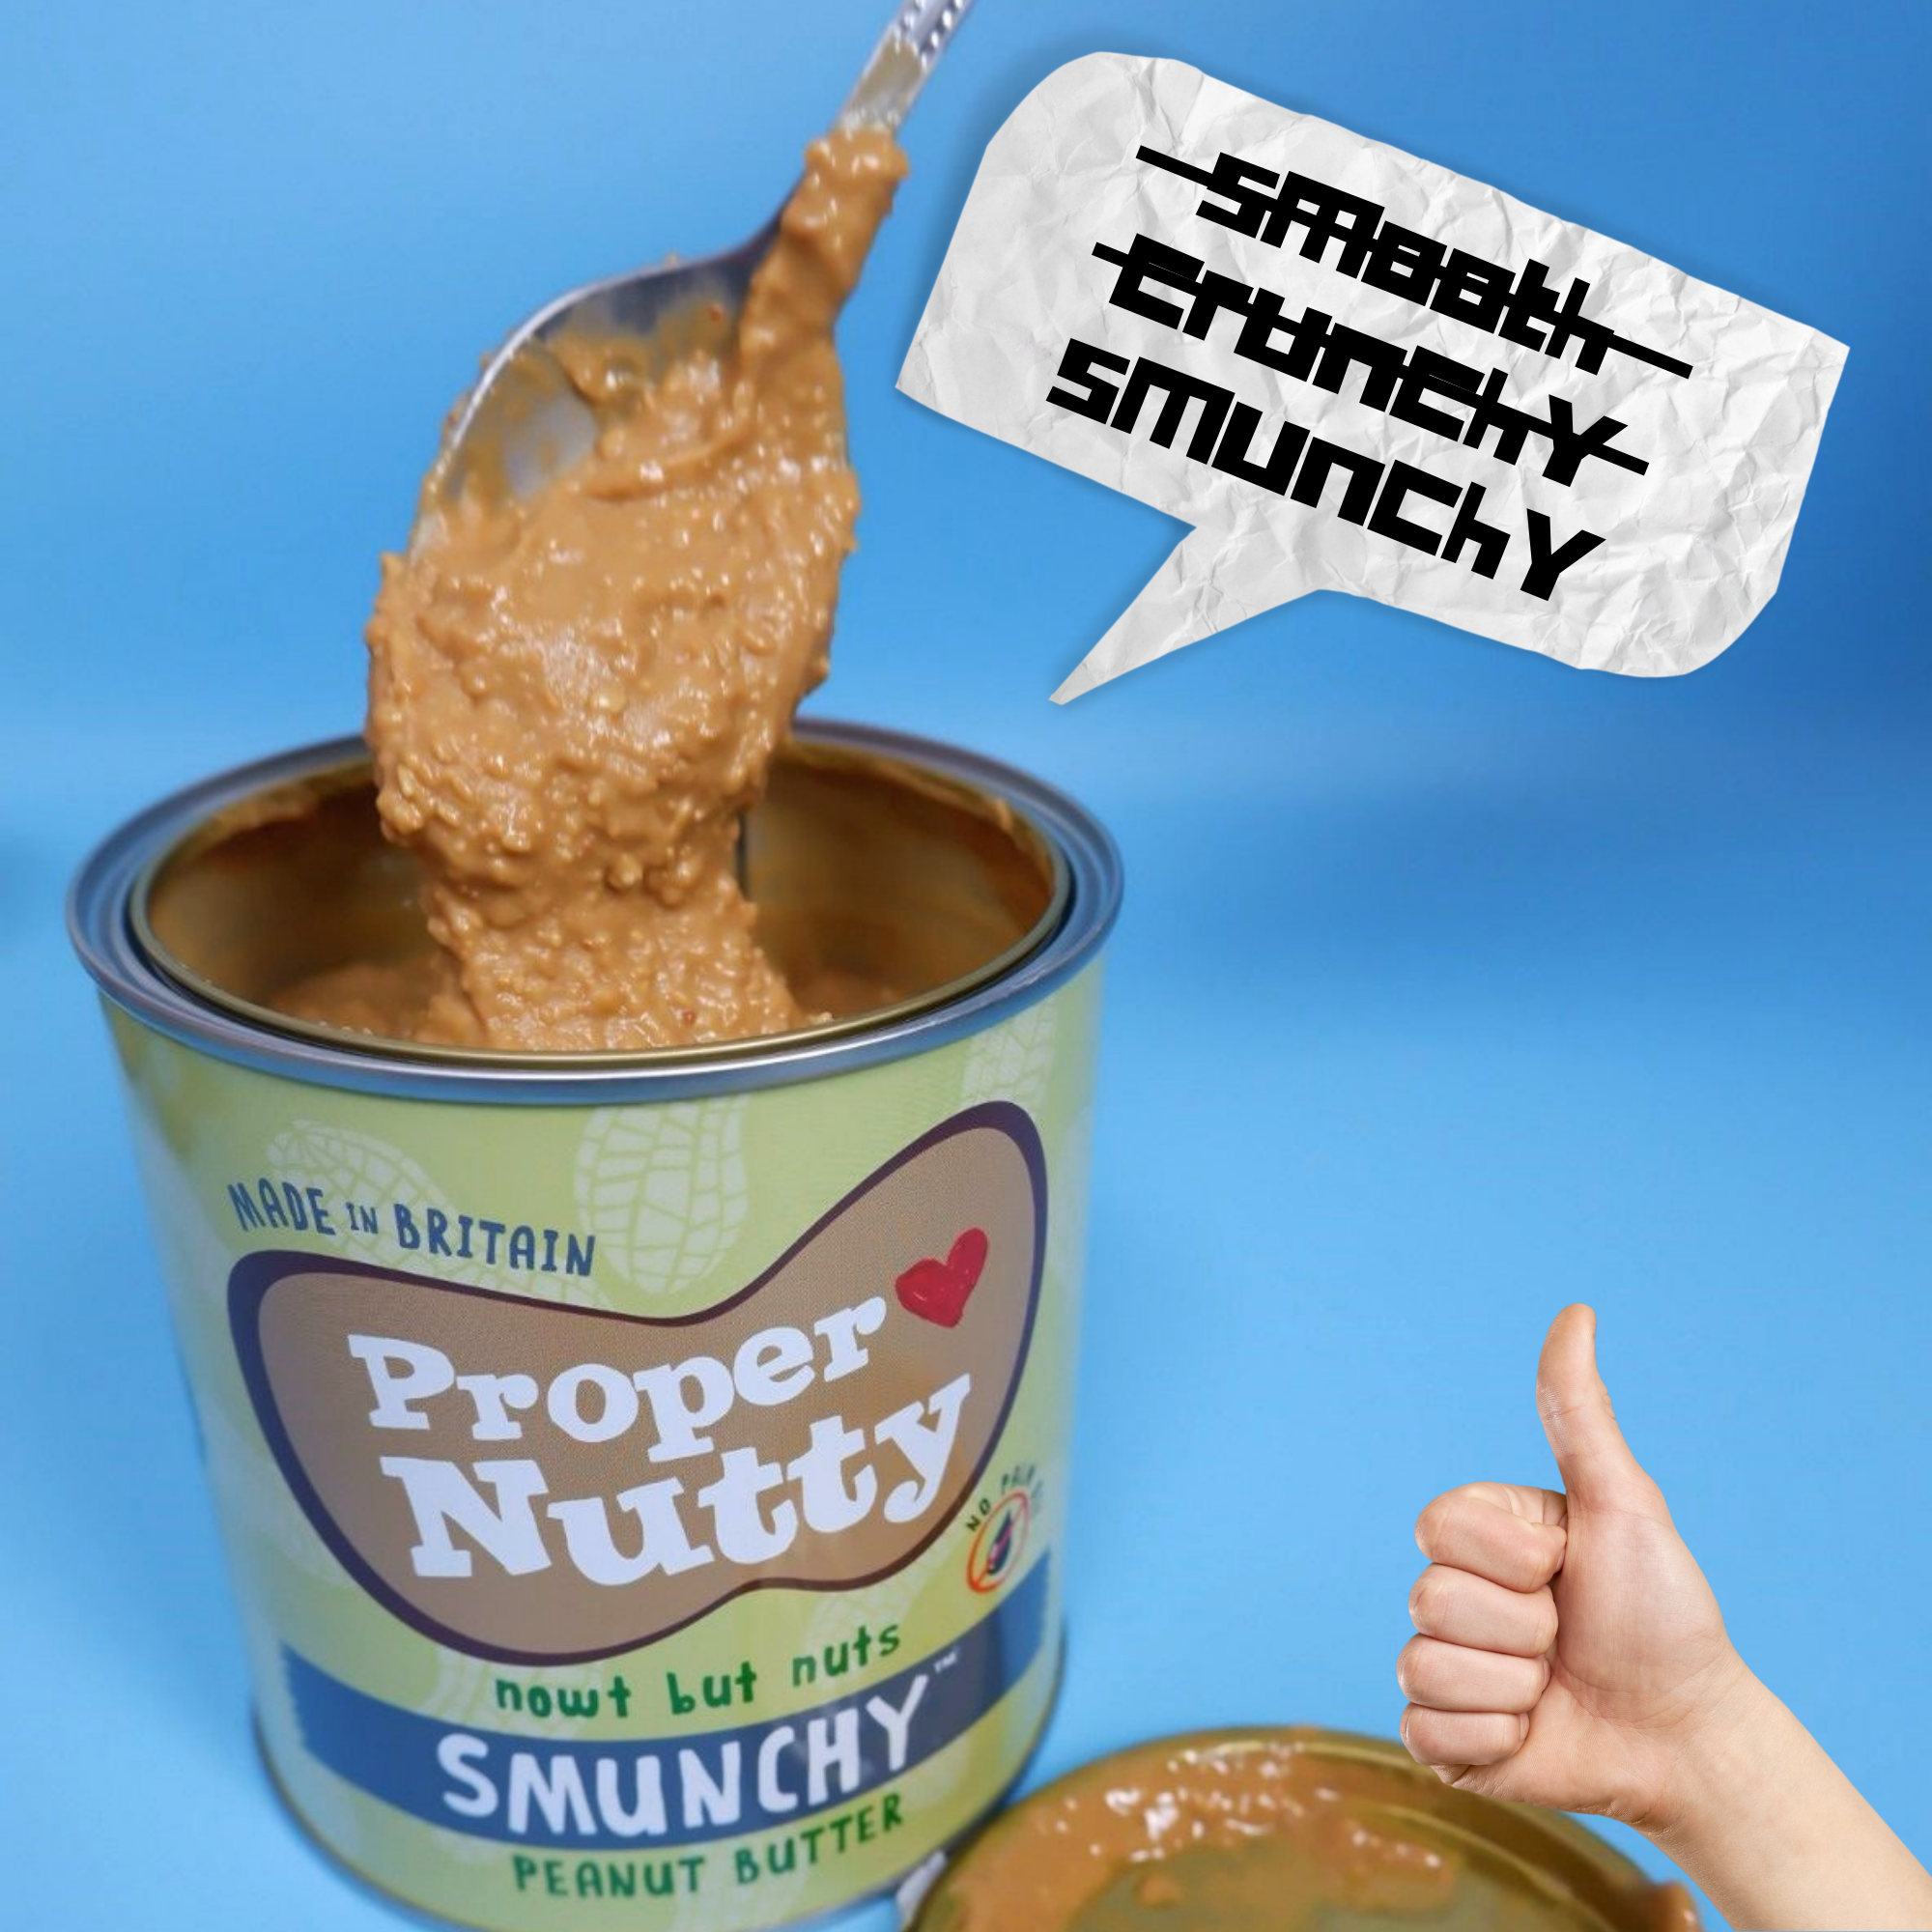 Proper Nutty| Artisan Smooth & Crunchy [Smunchy]| Peanut Butter| 100% Peanuts |1kg Tin|